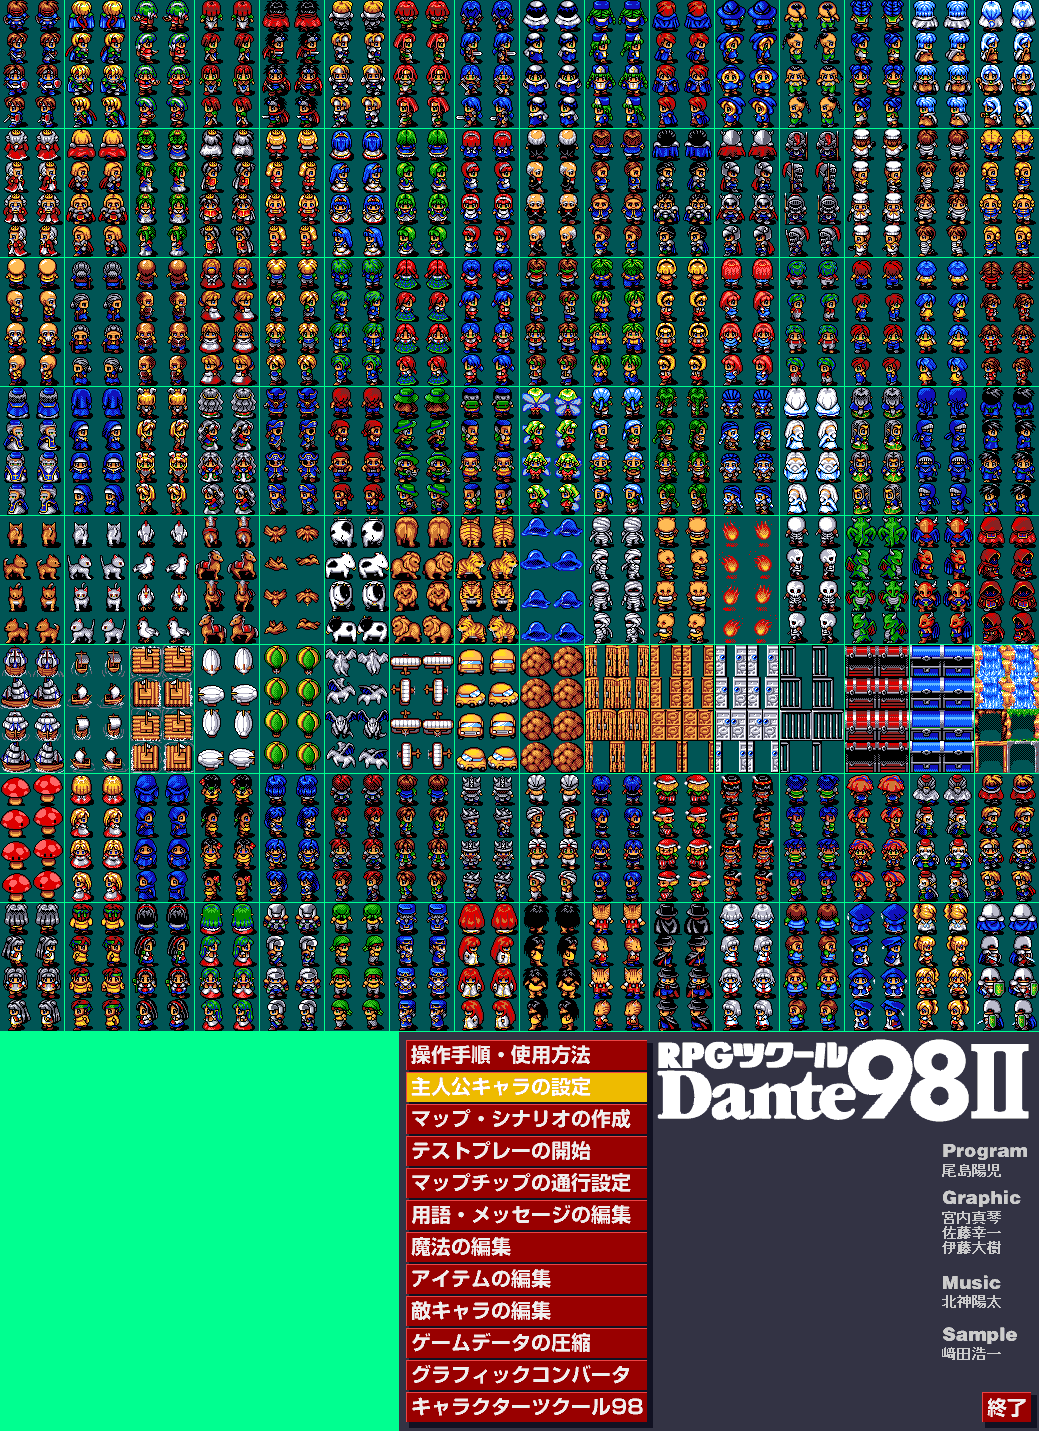 RPG Tsukūru Dante 98 II / RPG Maker Dante 98 II - Characters